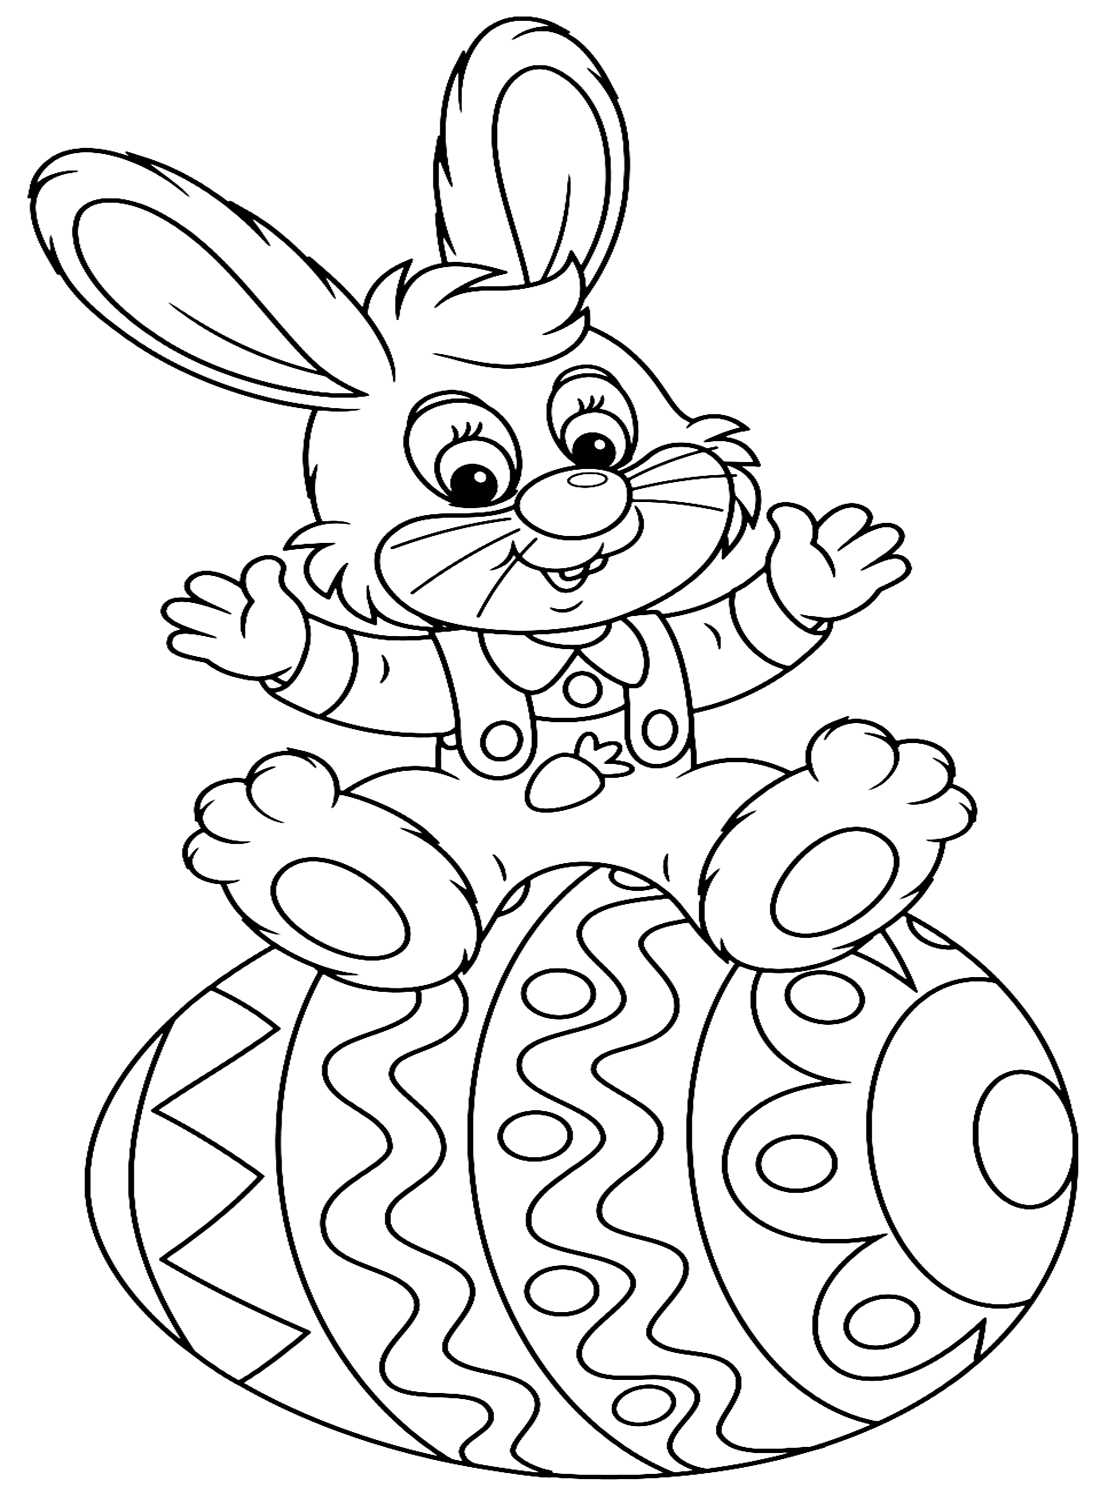 Happy Little Rabbit Sitting On Easter Egg from Rabbit